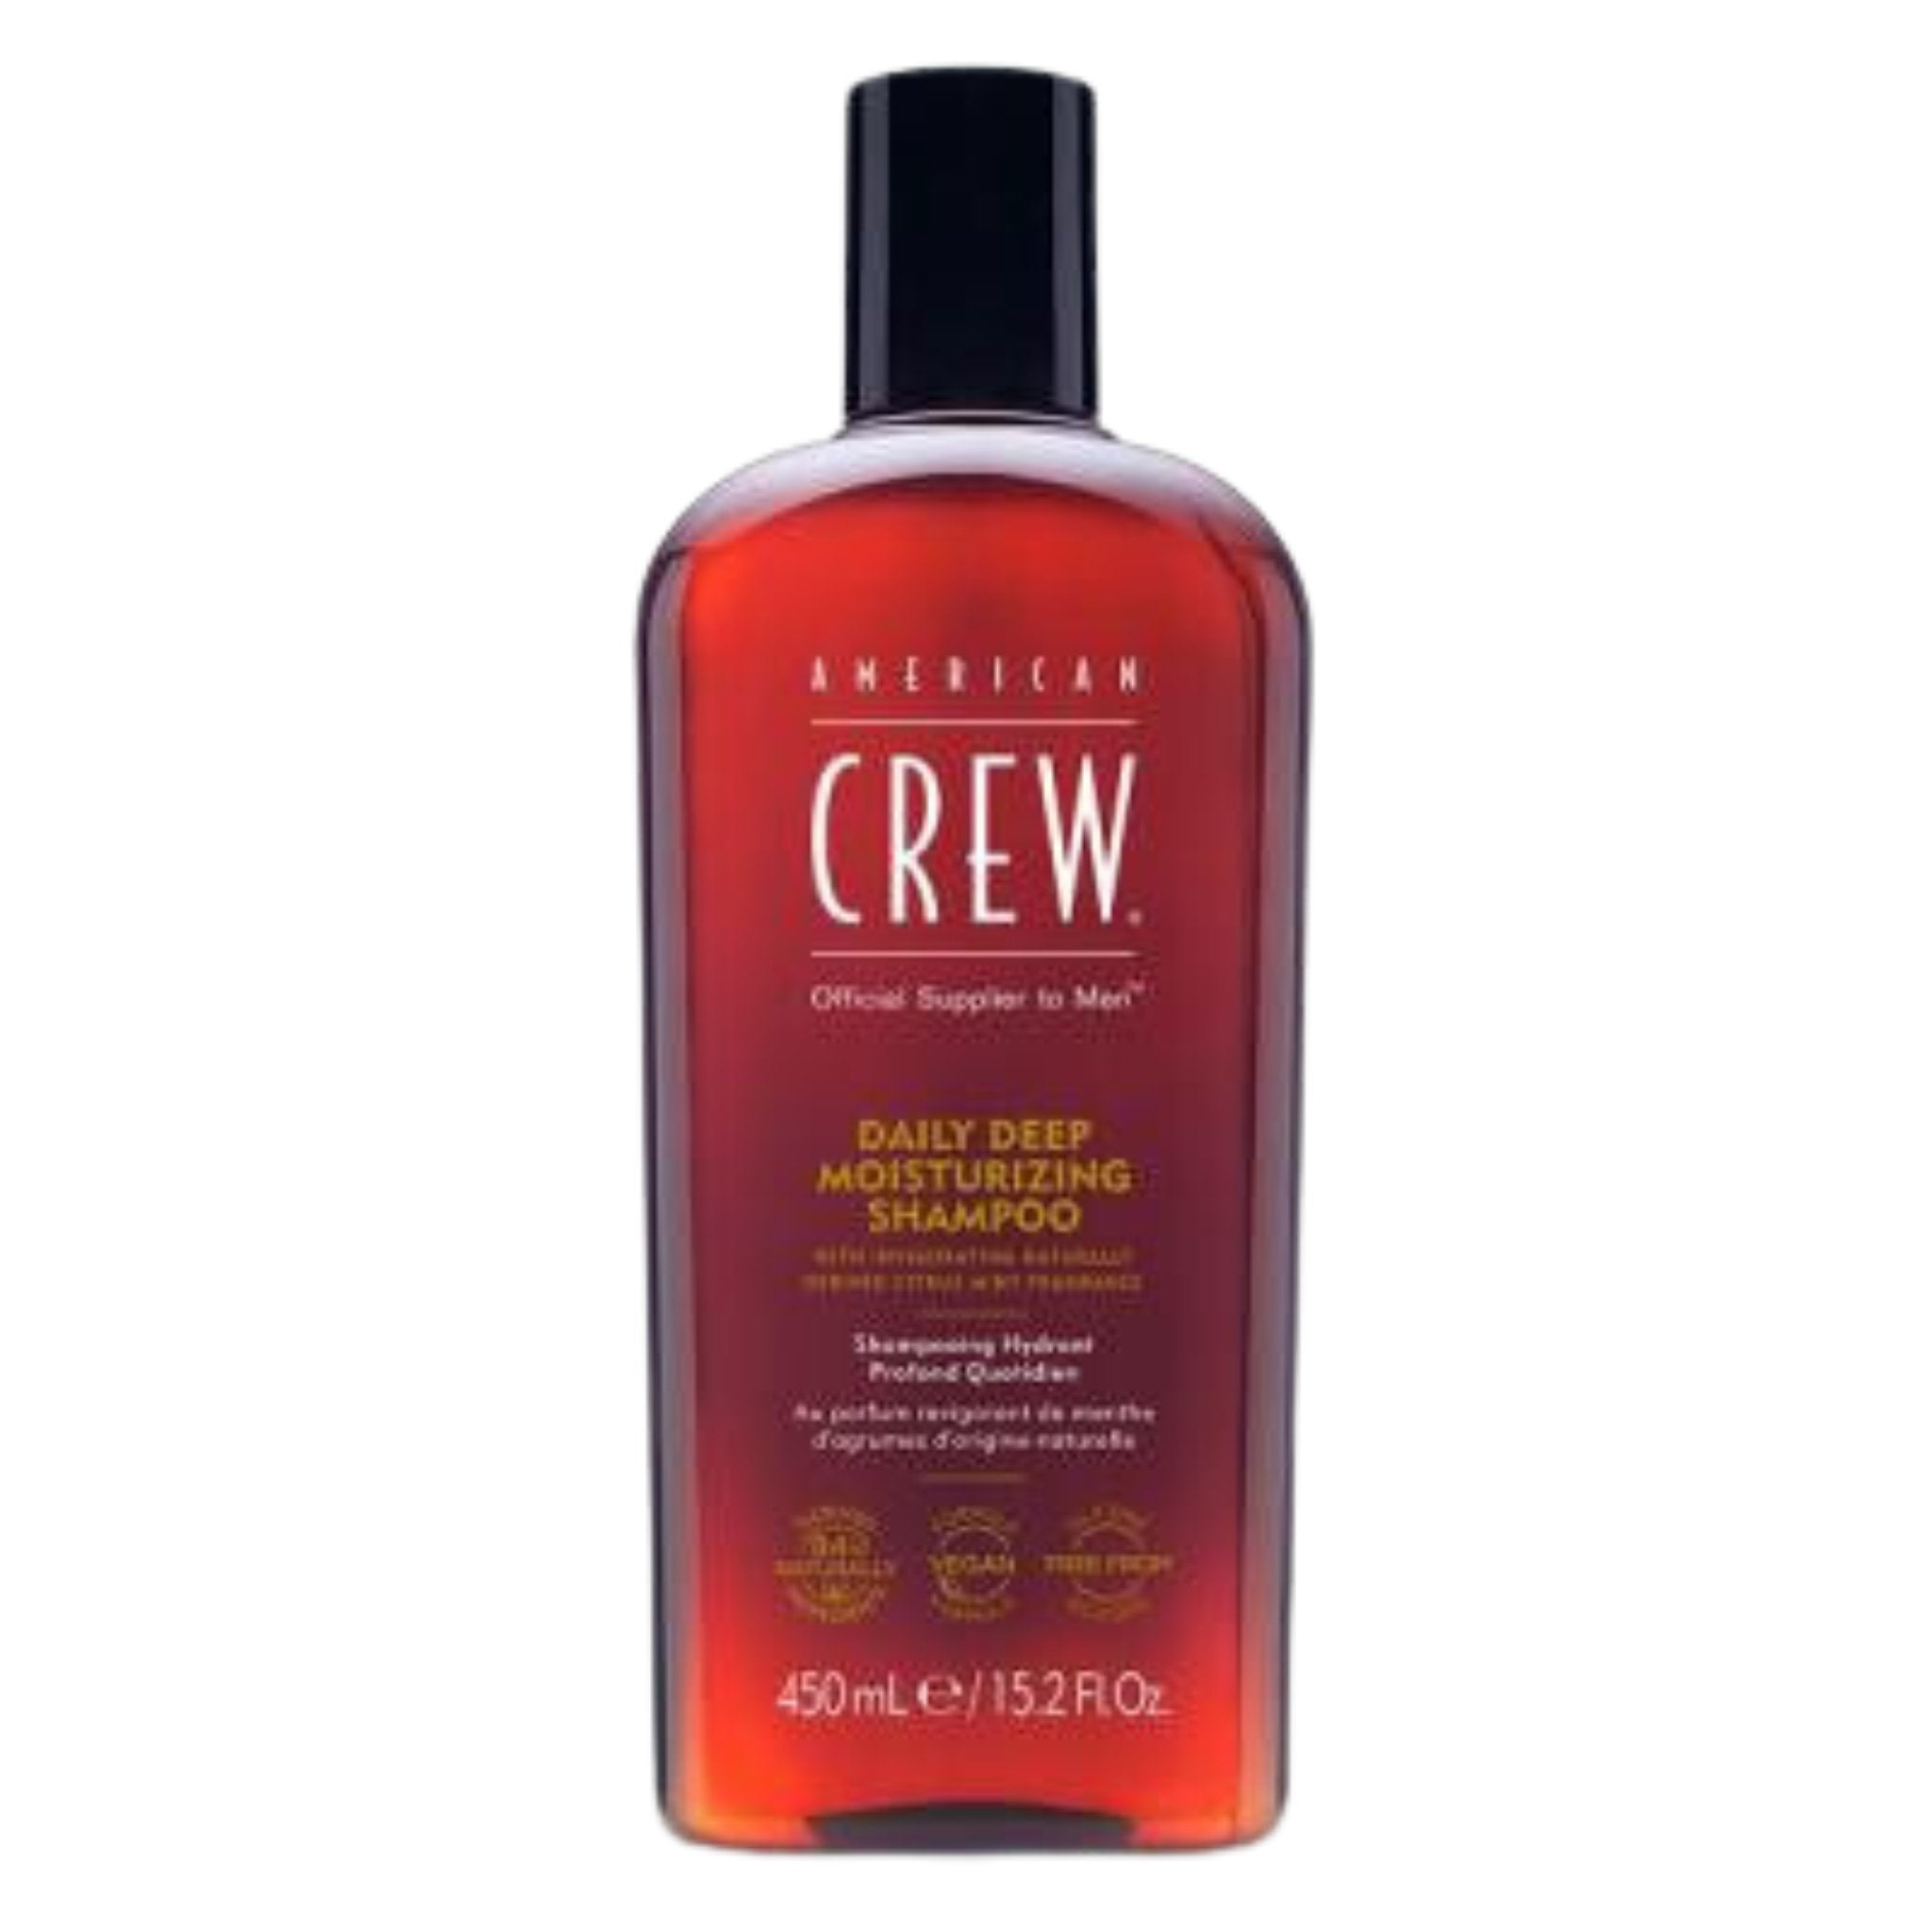 American Crew. Shampoing Hydratant Profond Quotidien - 450 ml - Concept C. Shop